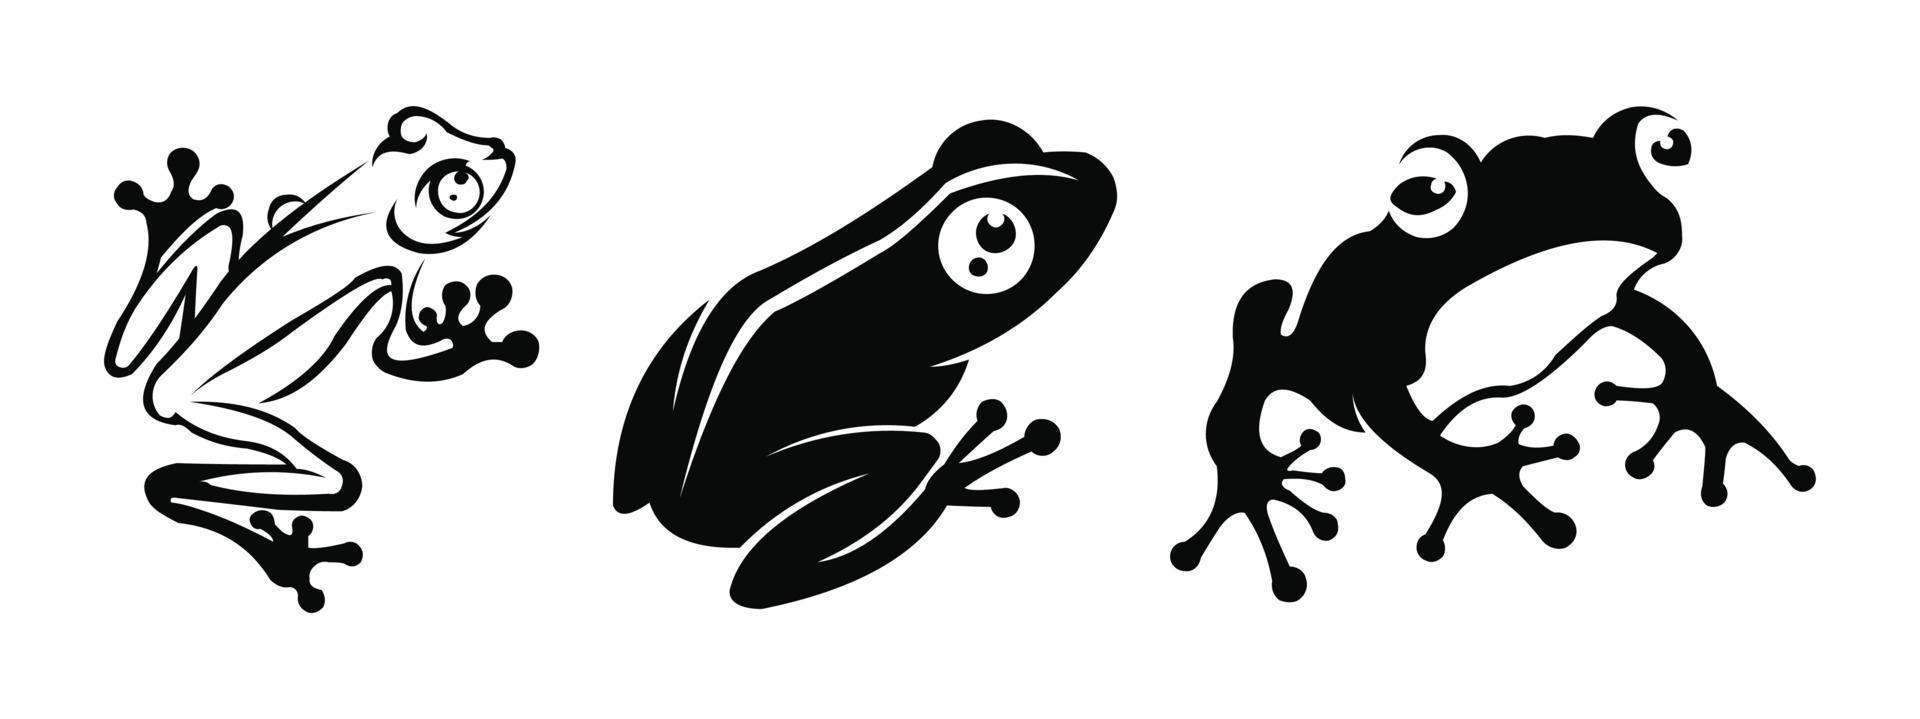 vector van kikker ontwerp amfibie dier, kikker logo of pictogram